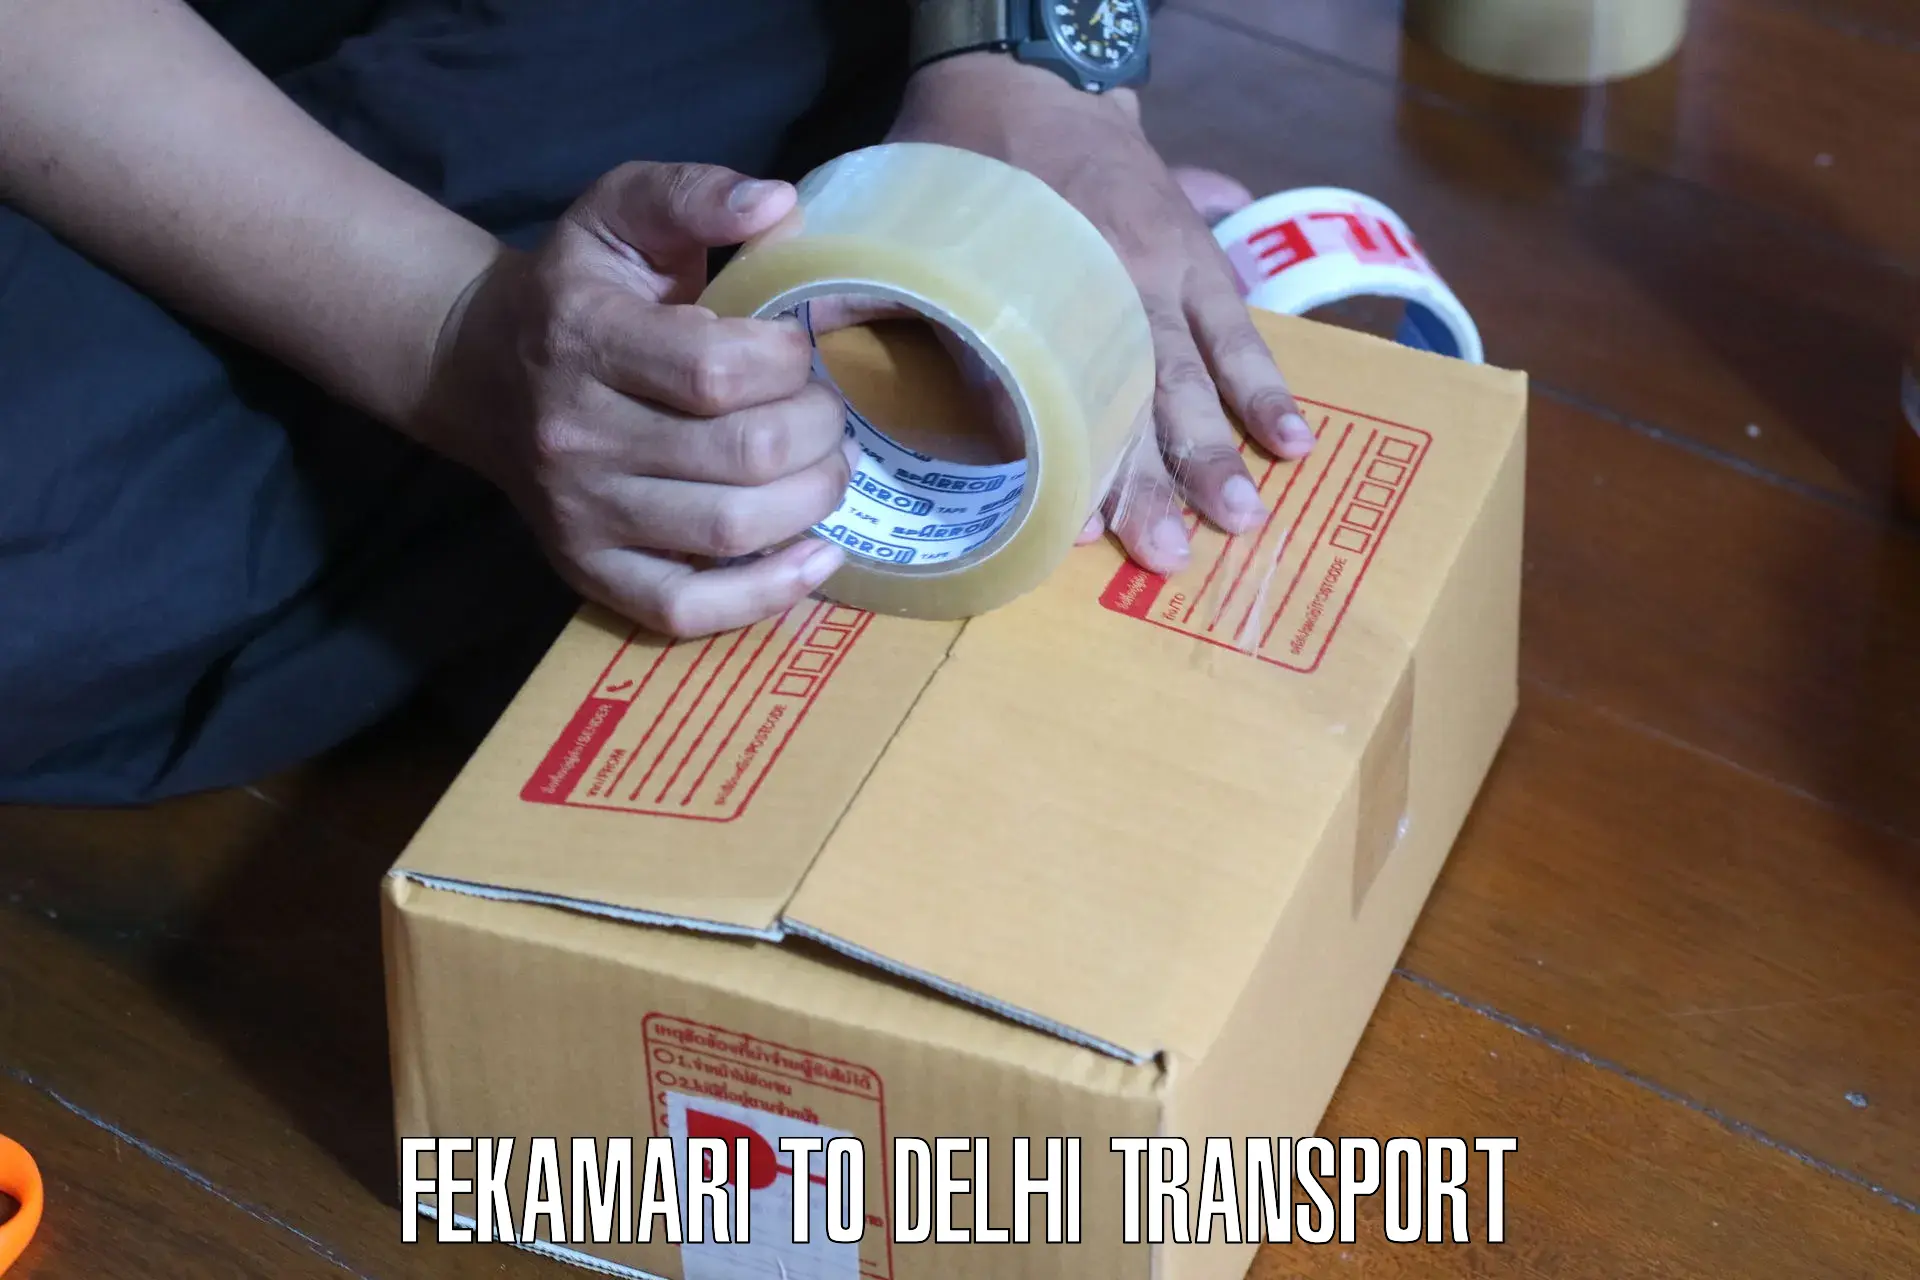 Daily transport service Fekamari to Sansad Marg